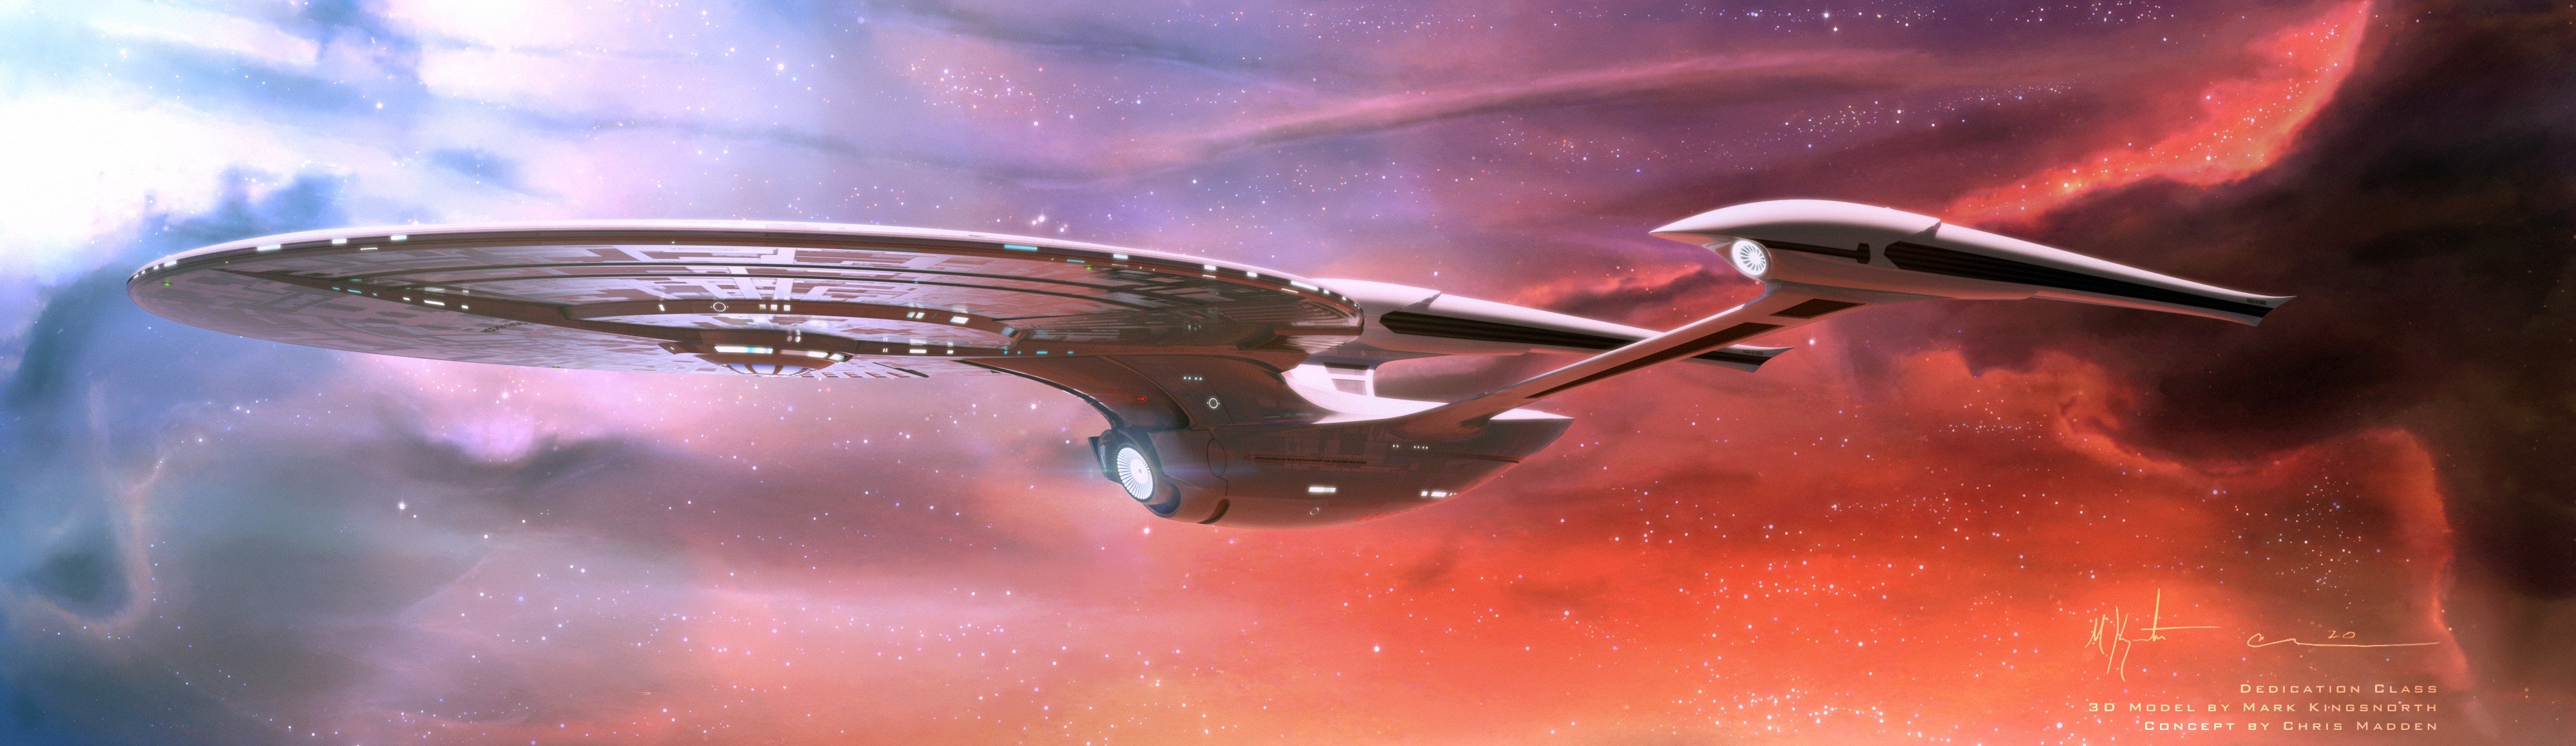 Star Trek, Spaceship Wallpaper